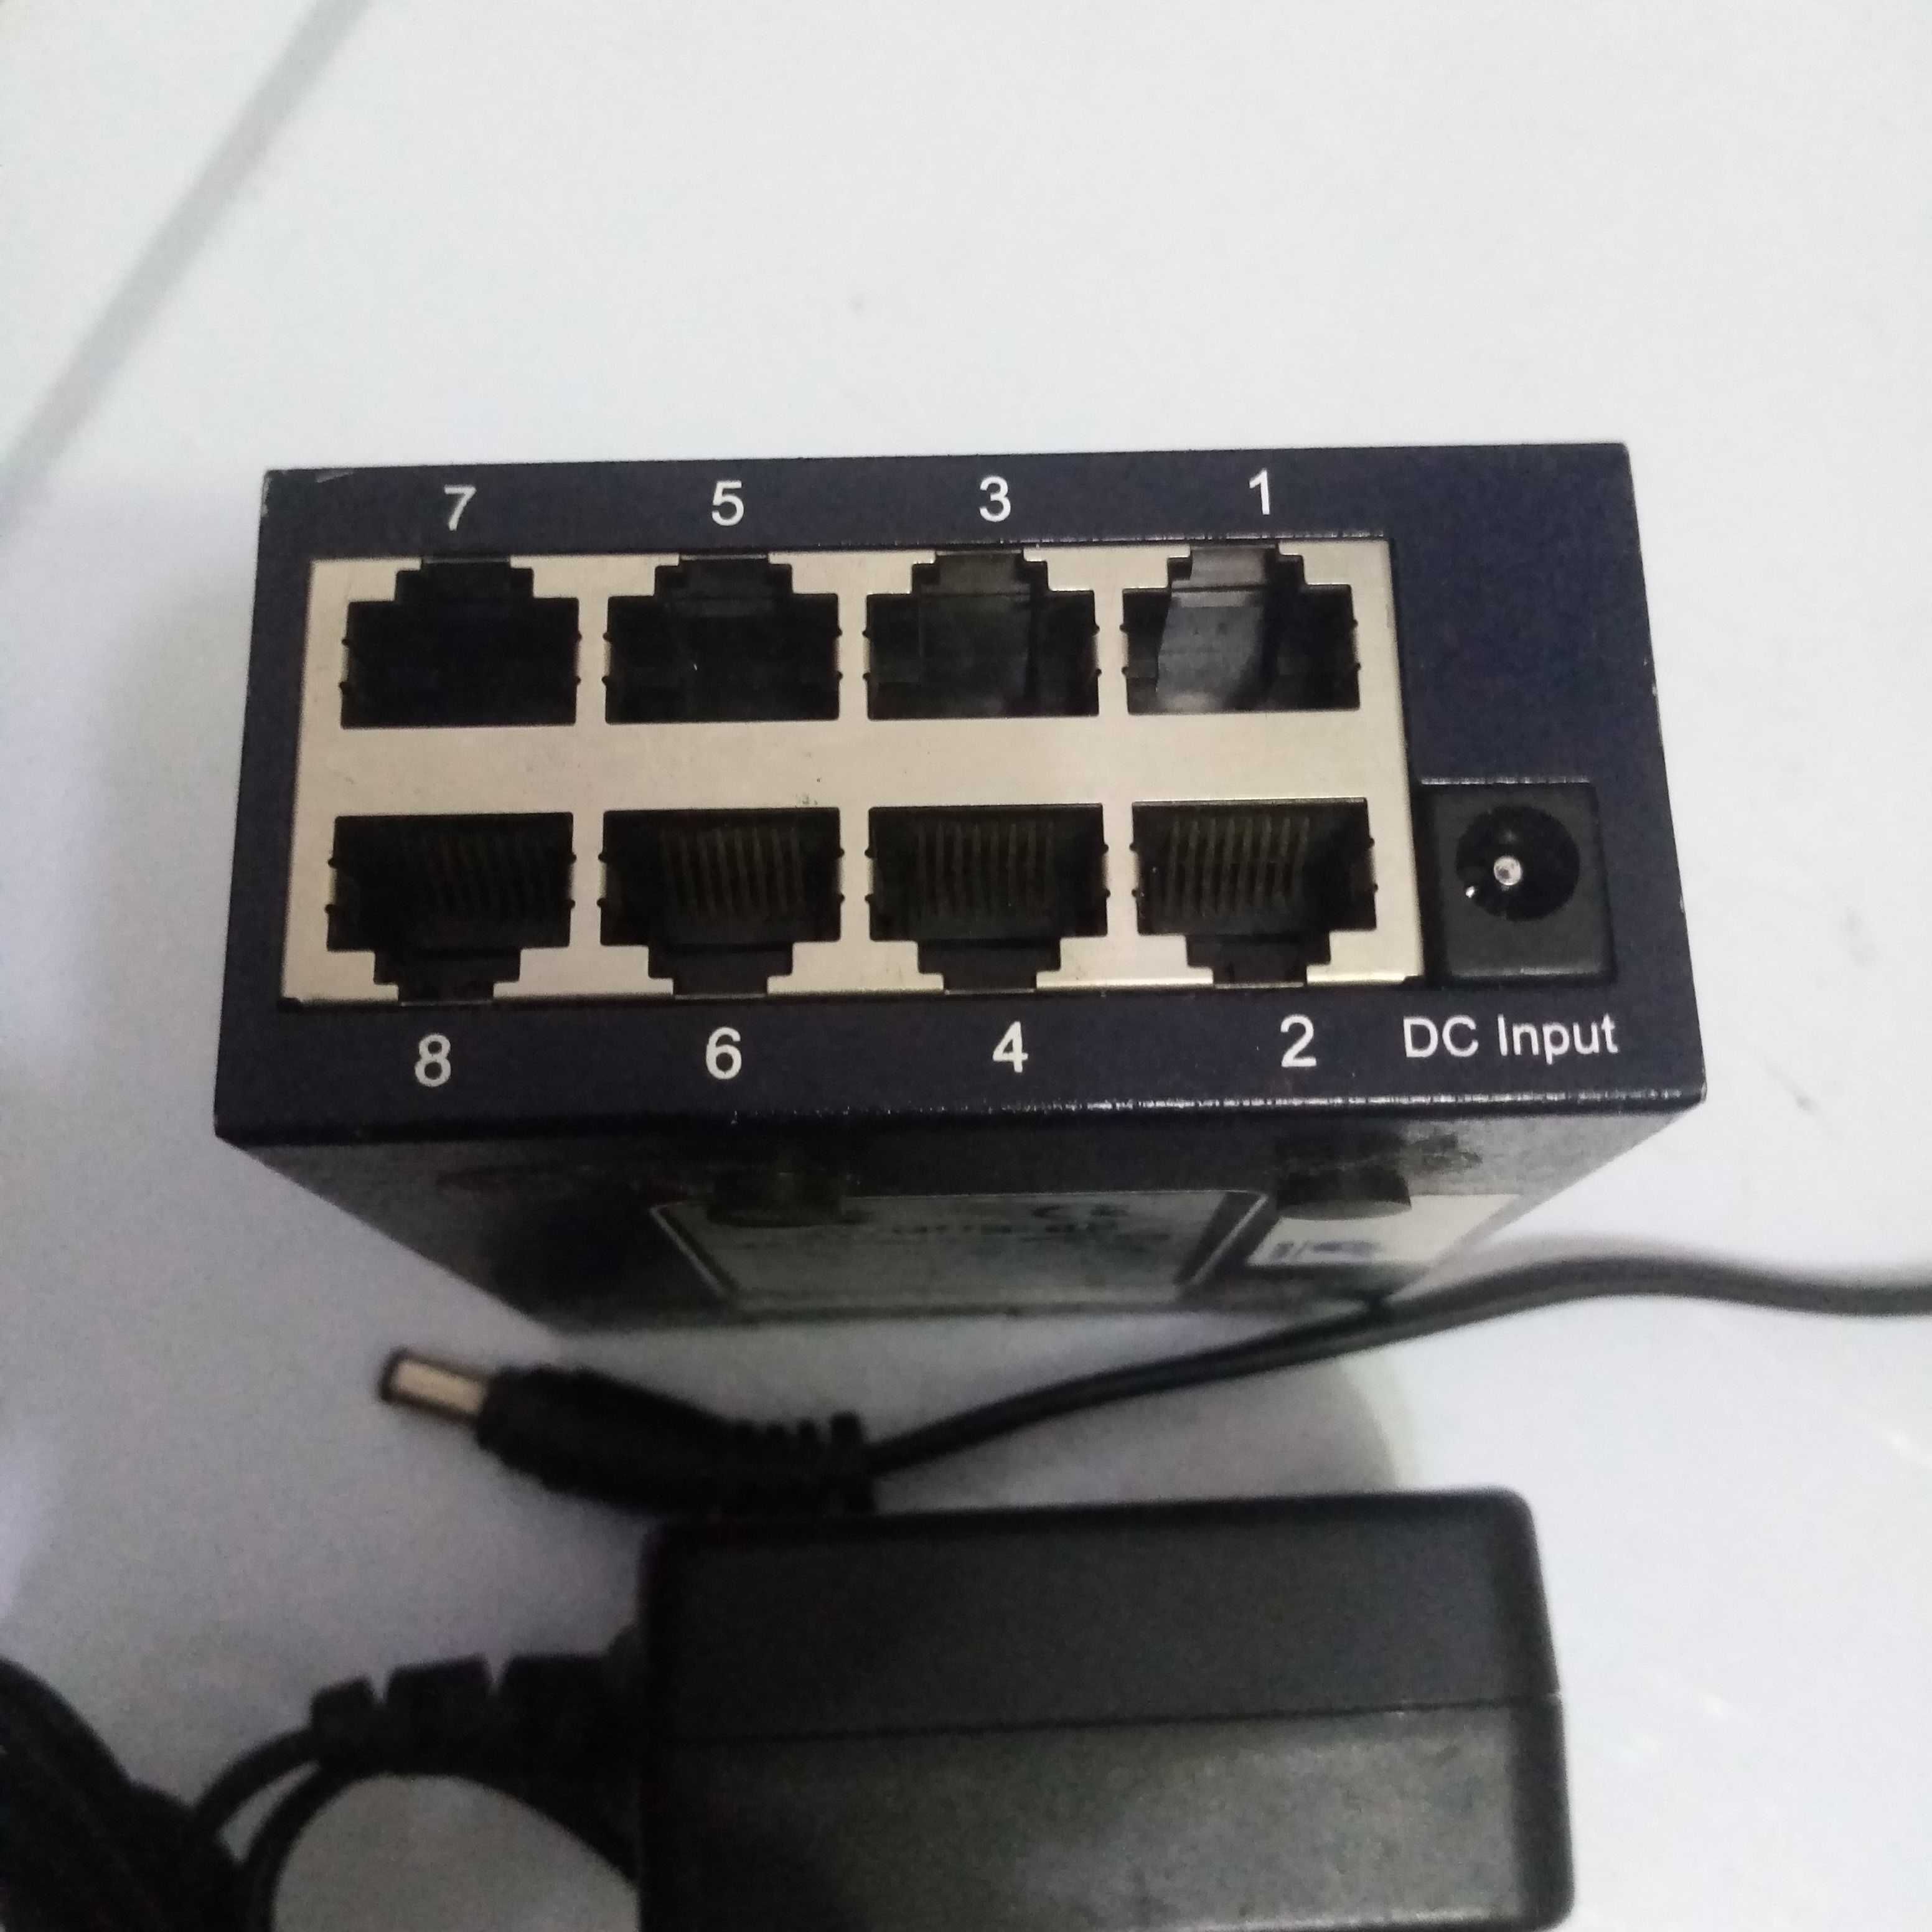 Switch ST-Lab N153 10/100M 8 Ports NWAY Switch